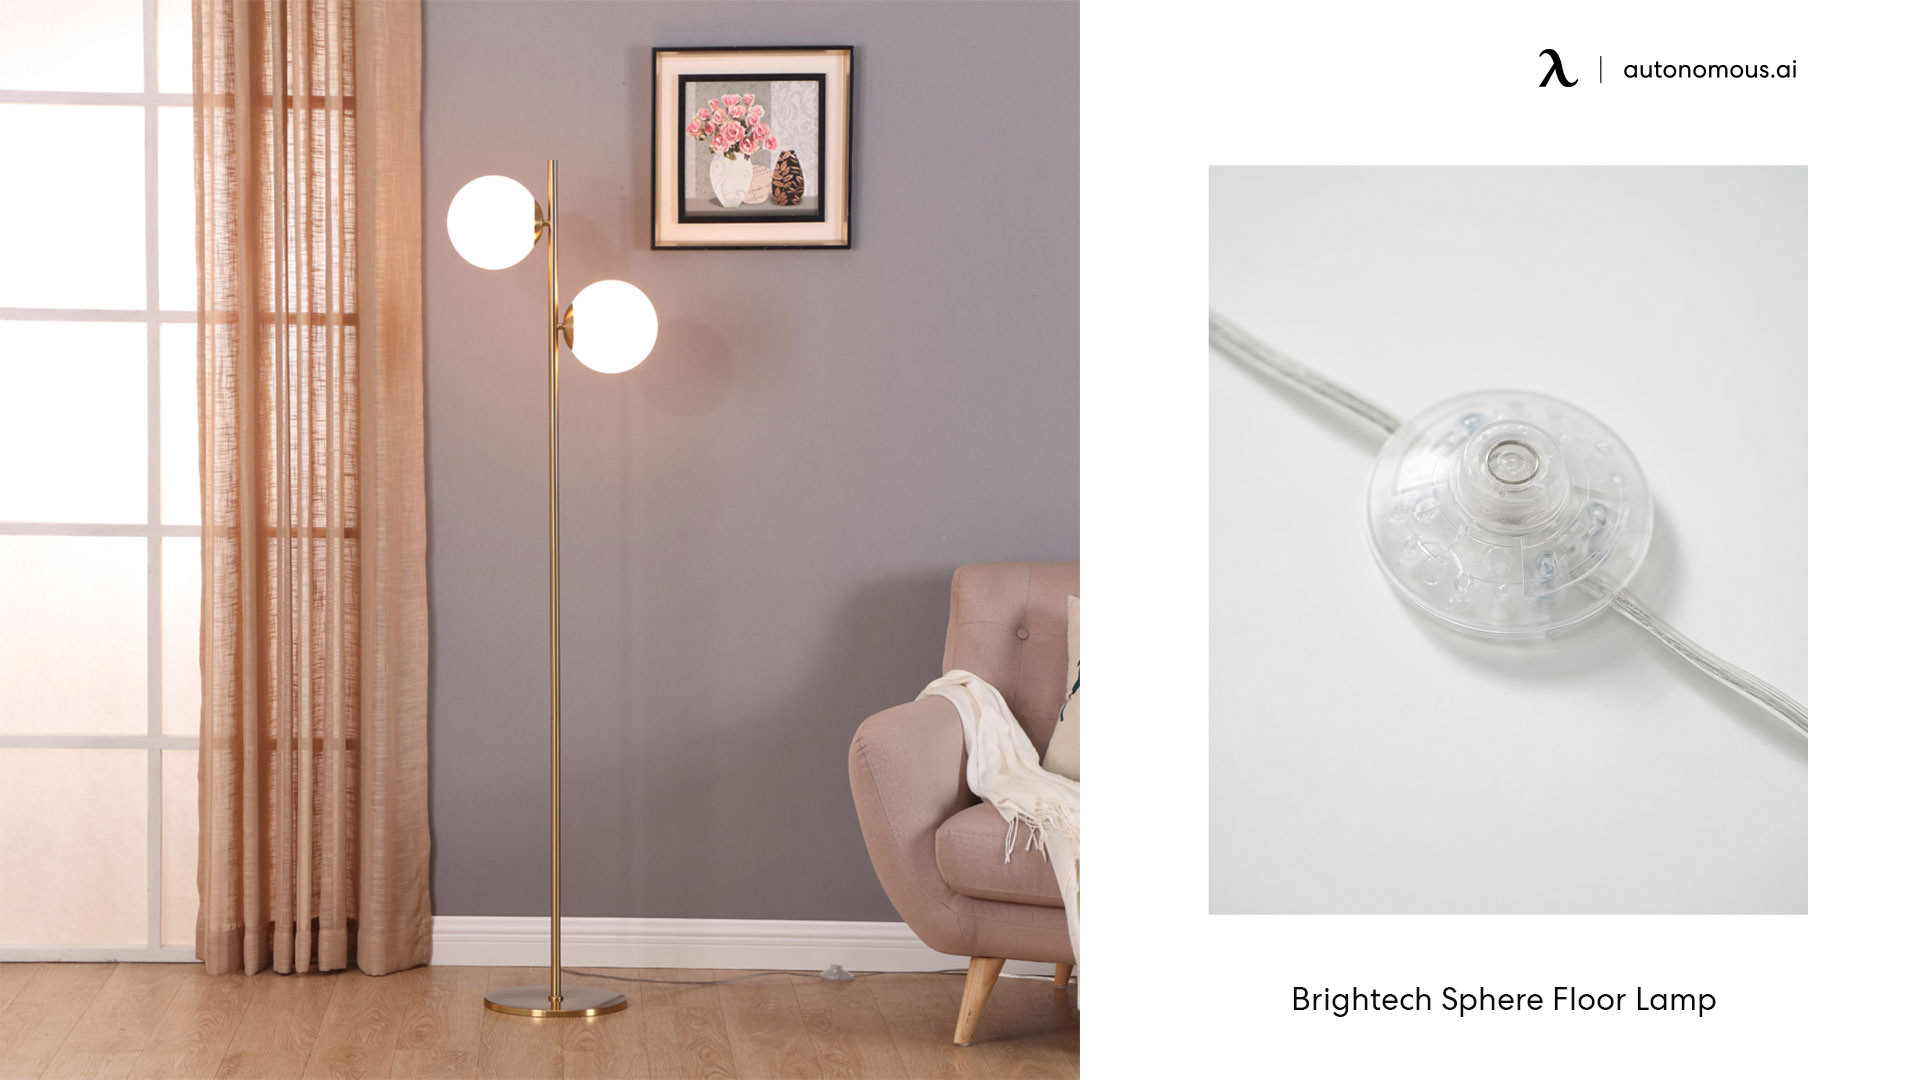 Brightech Sphere Floor Lamp home office lighting